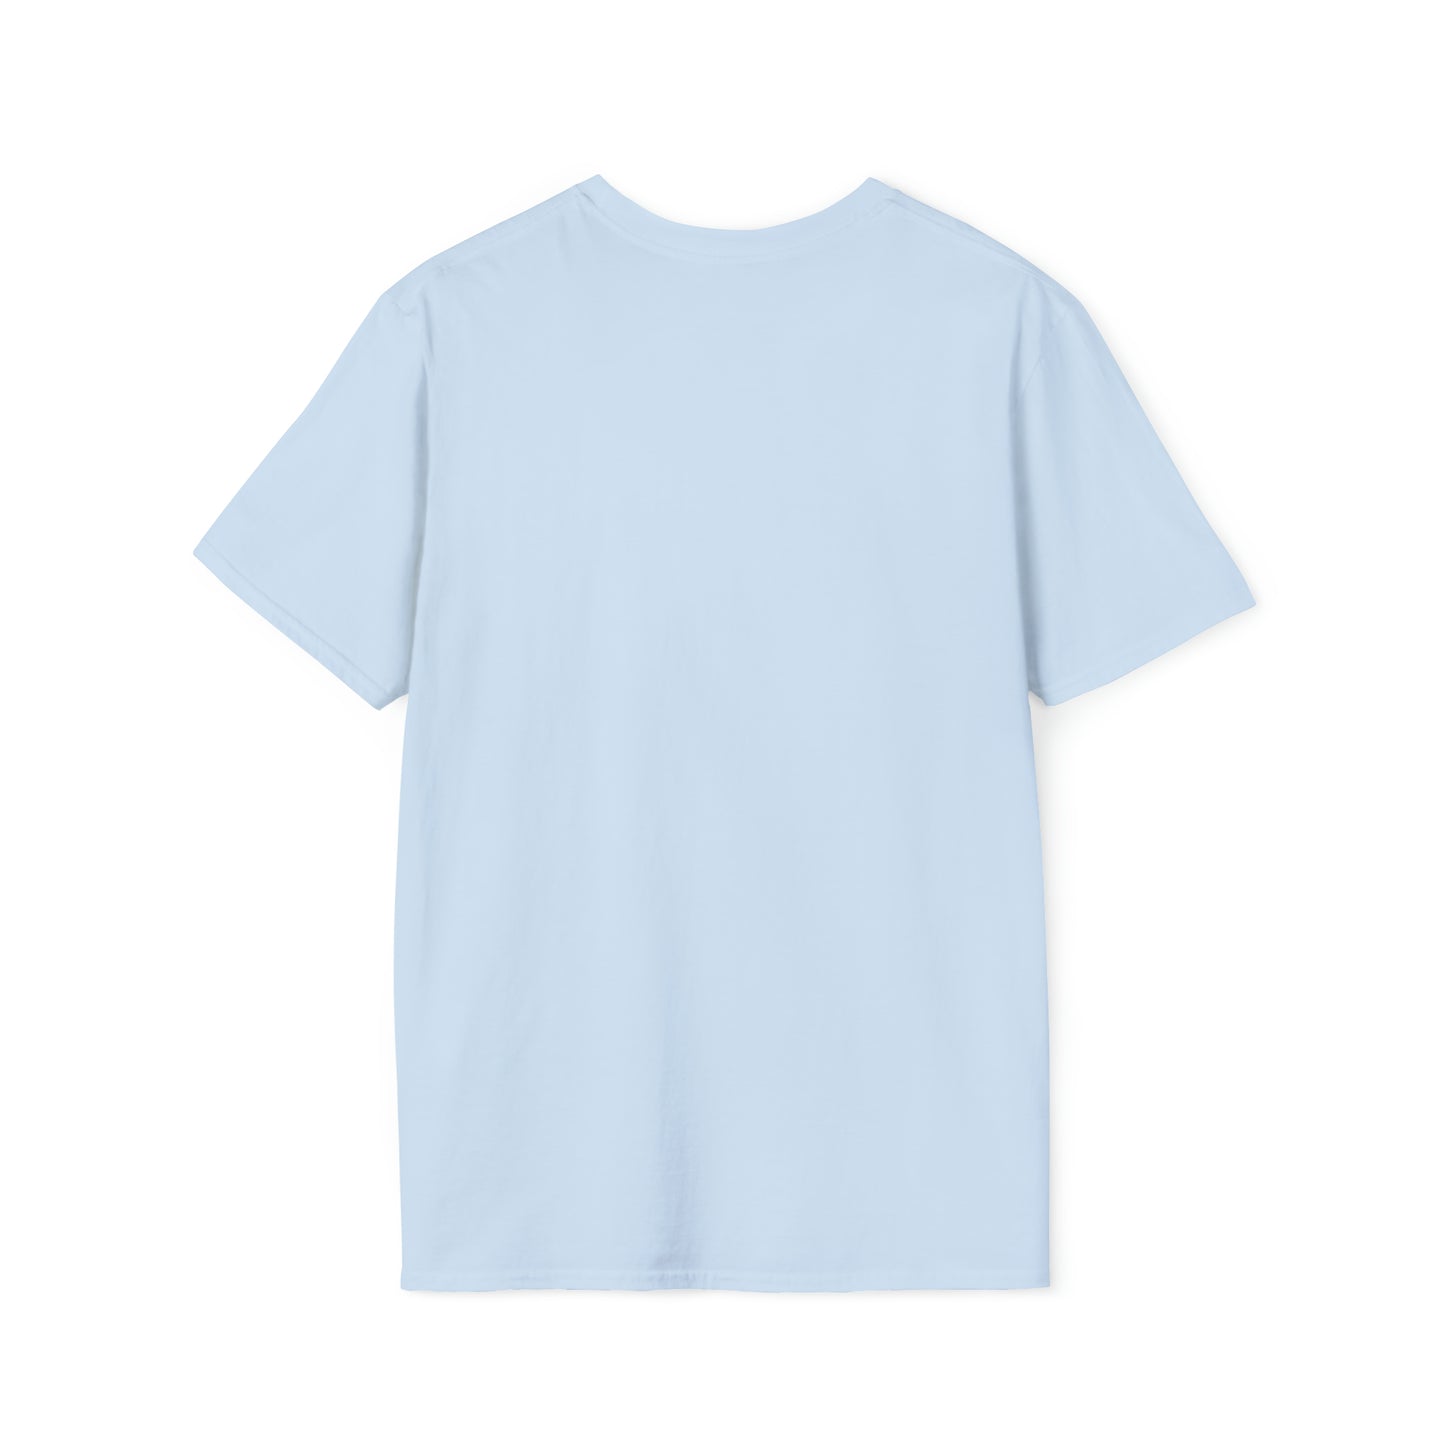 Happy New You Unisex Softstyle T-Shirt